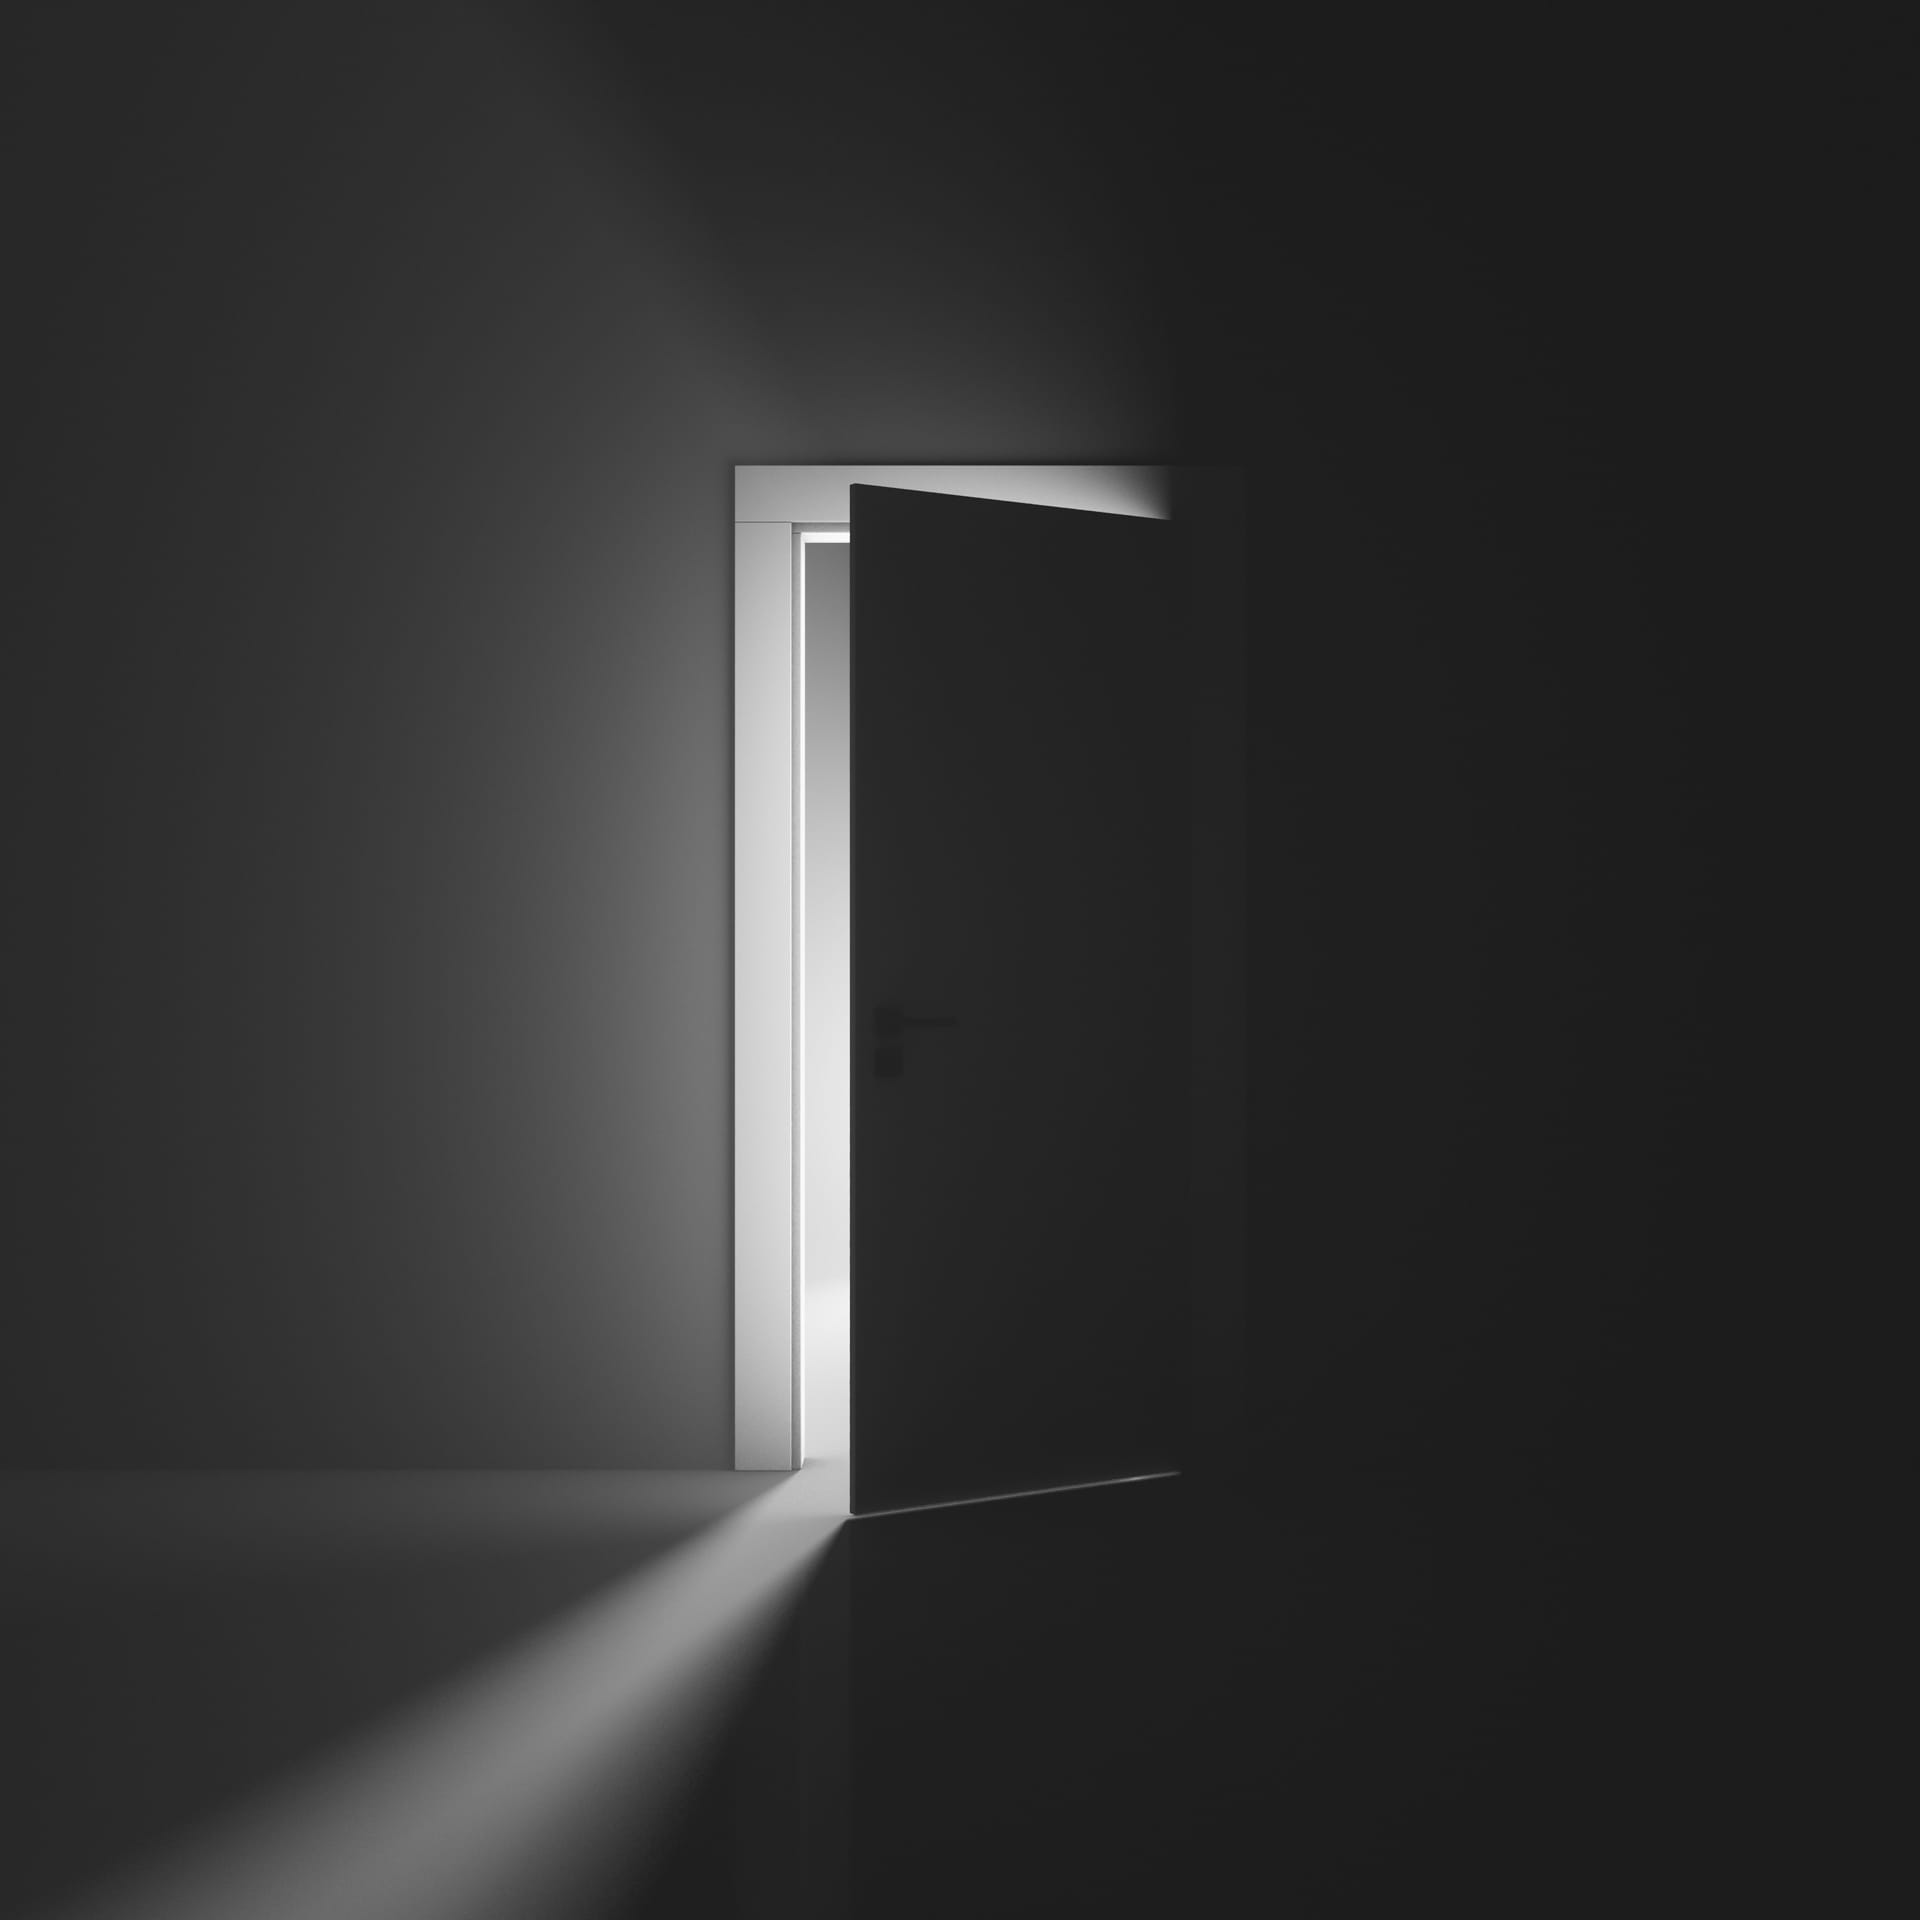 Bright light slightly ajar door abstract background 3d rendering